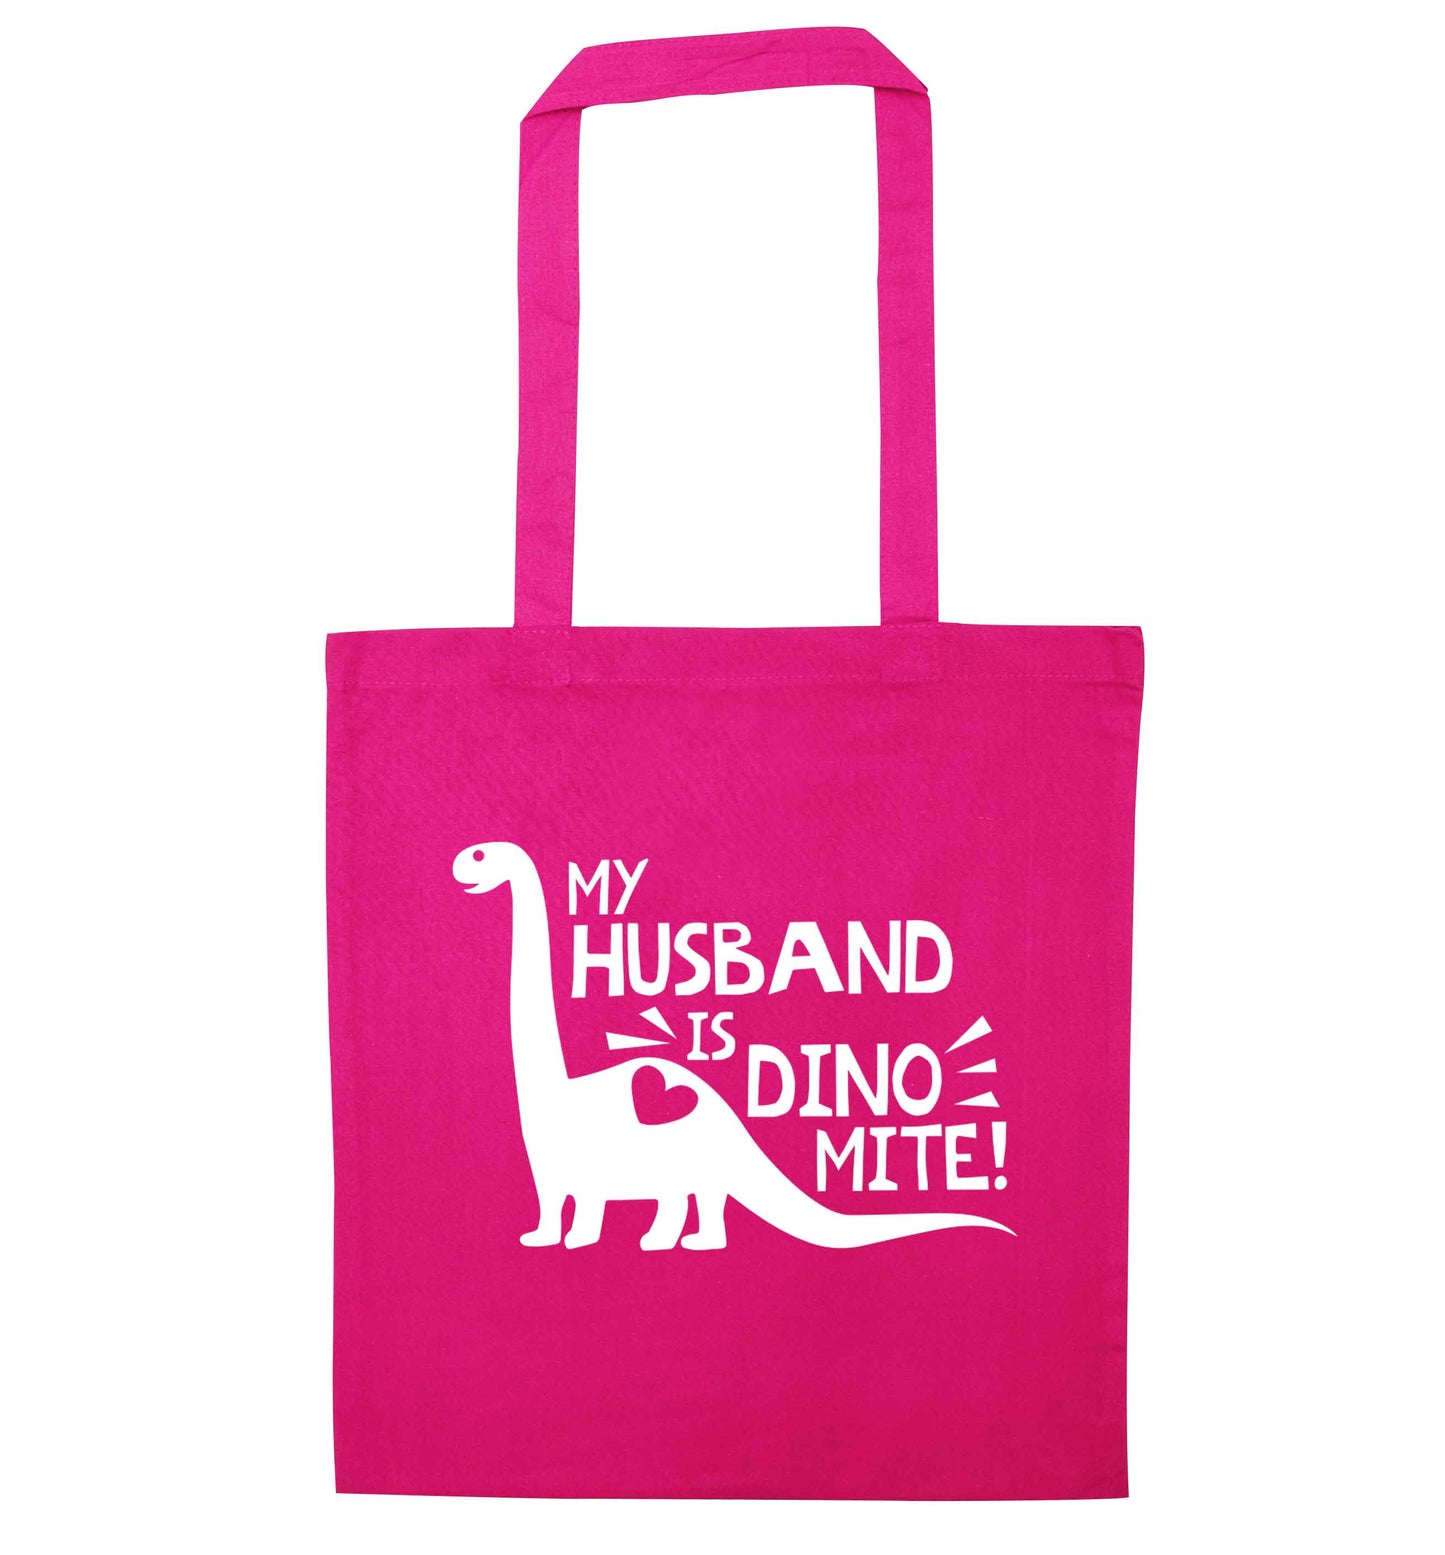 My husband is dinomite! pink tote bag